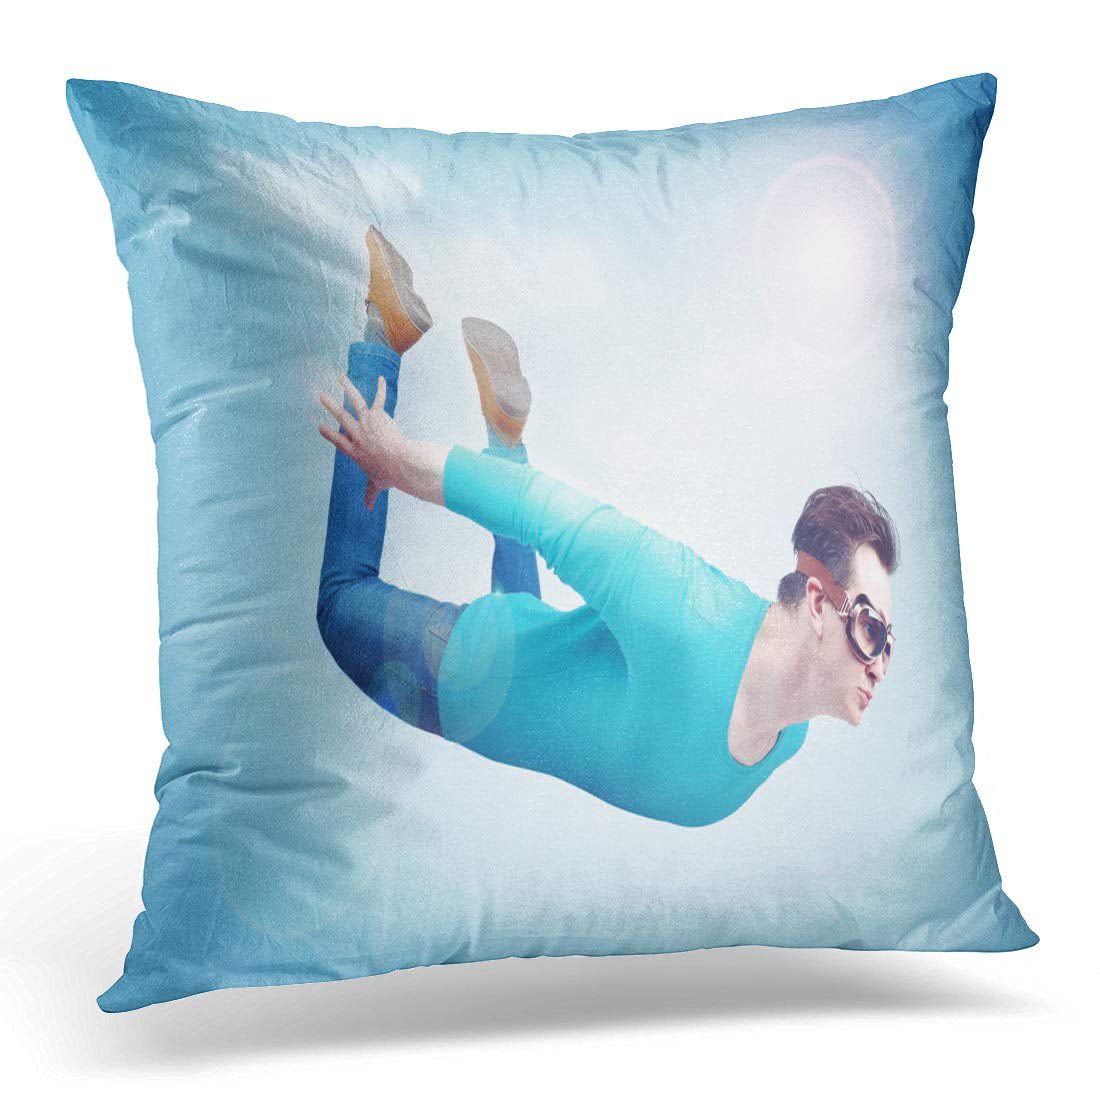 Retro Blue Scuba Diver Outfits Vintage Design-Retro Scuba Diving Throw Pillow 18x18 Multicolor 